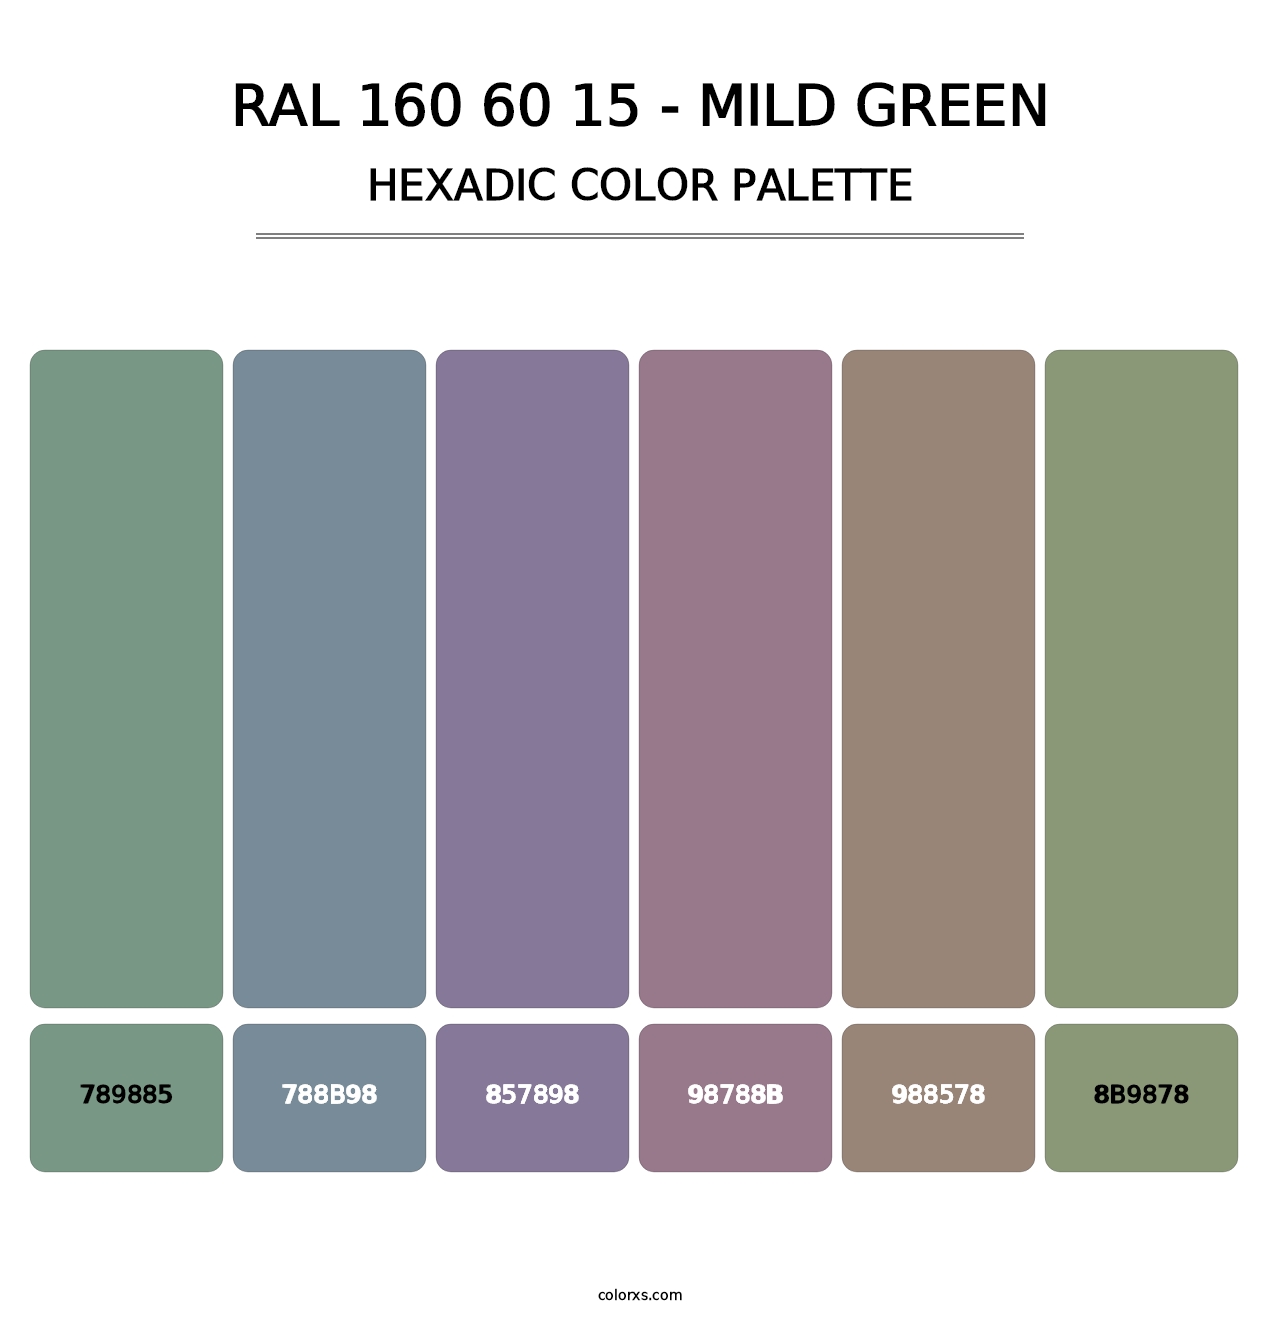 RAL 160 60 15 - Mild Green - Hexadic Color Palette